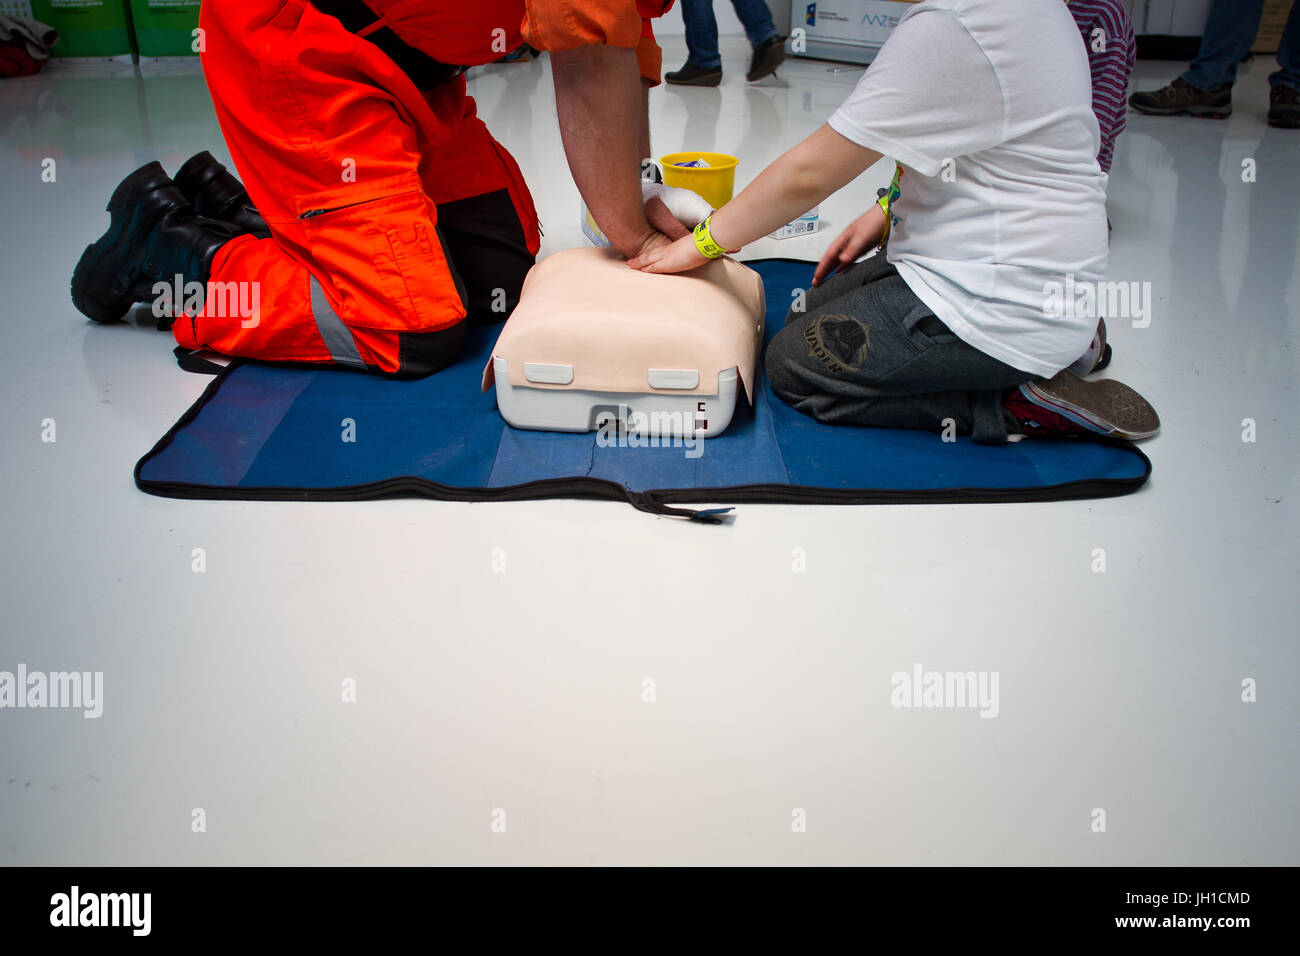 First aid health education learning cardiopulmonary resuscitation reanimation kid child Stock Photo